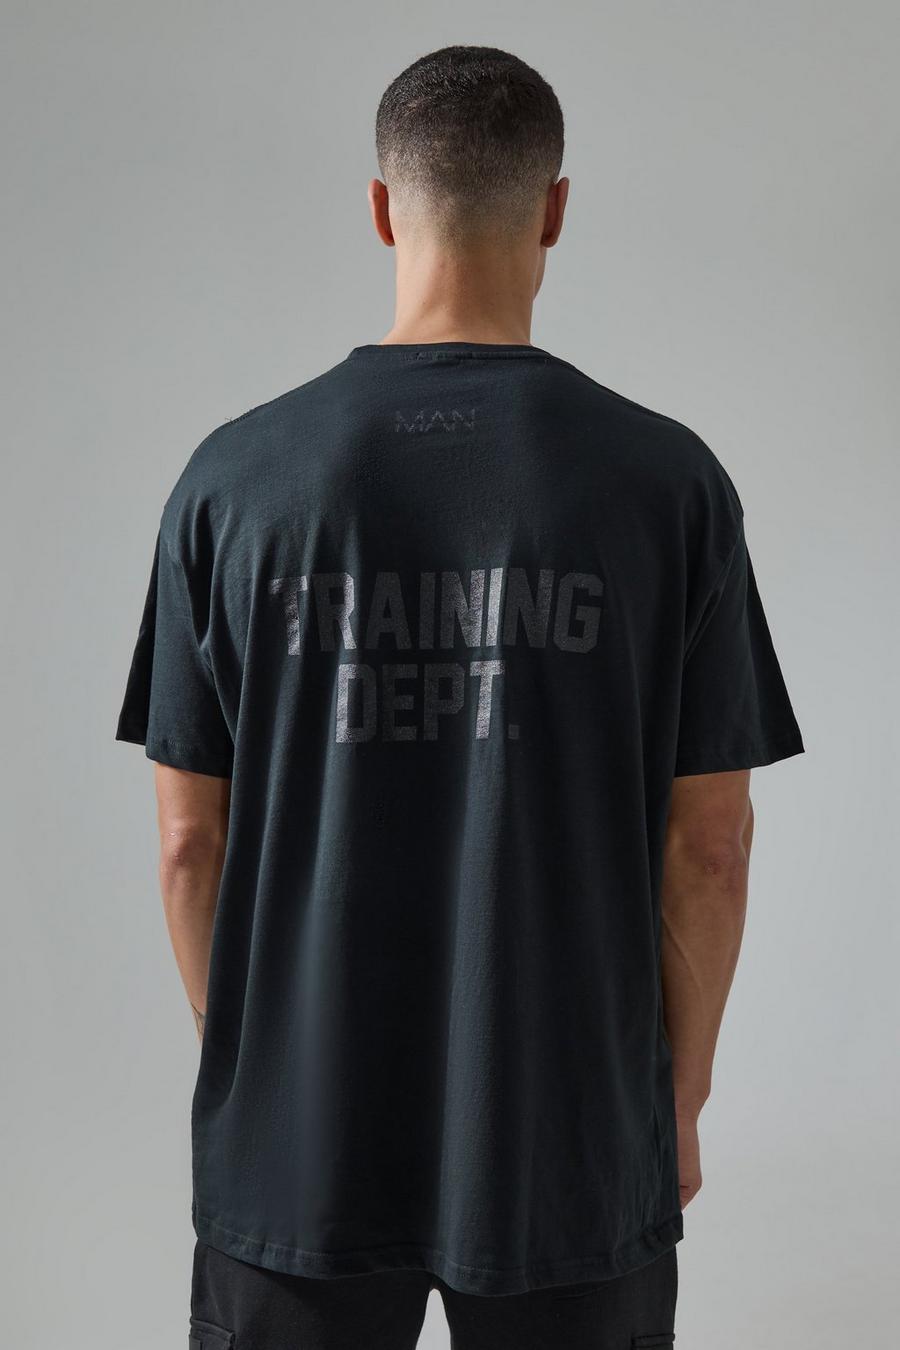 Camiseta oversize Active Training Dept, Black image number 1